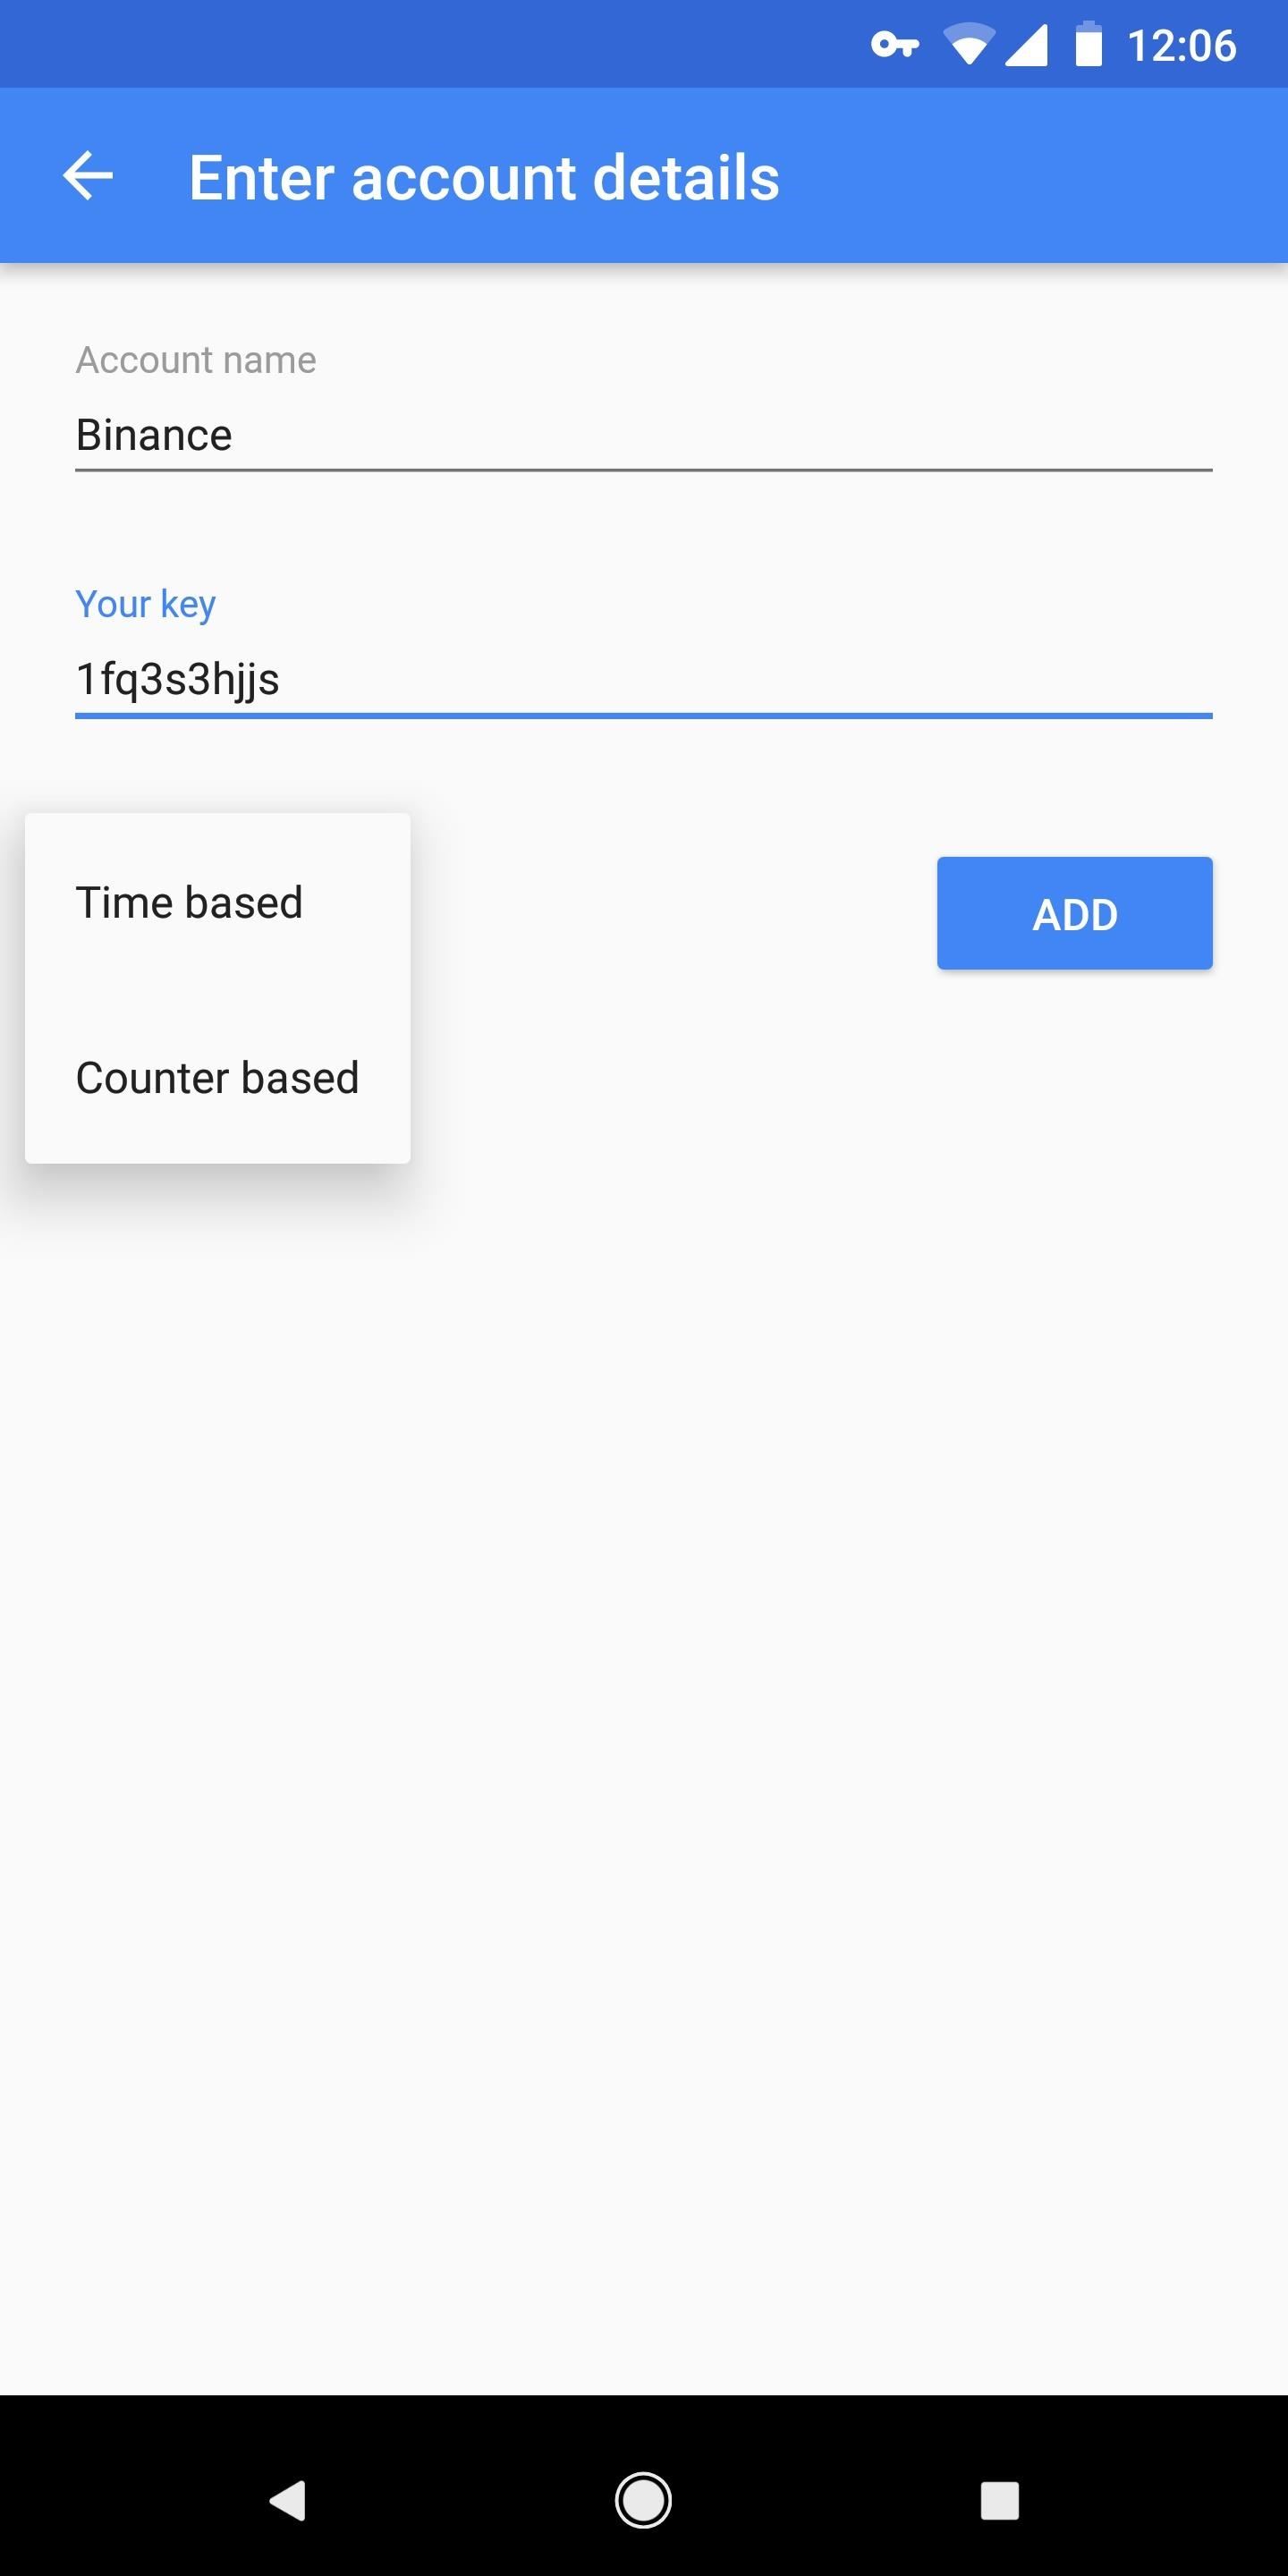 Google authenticator time sync